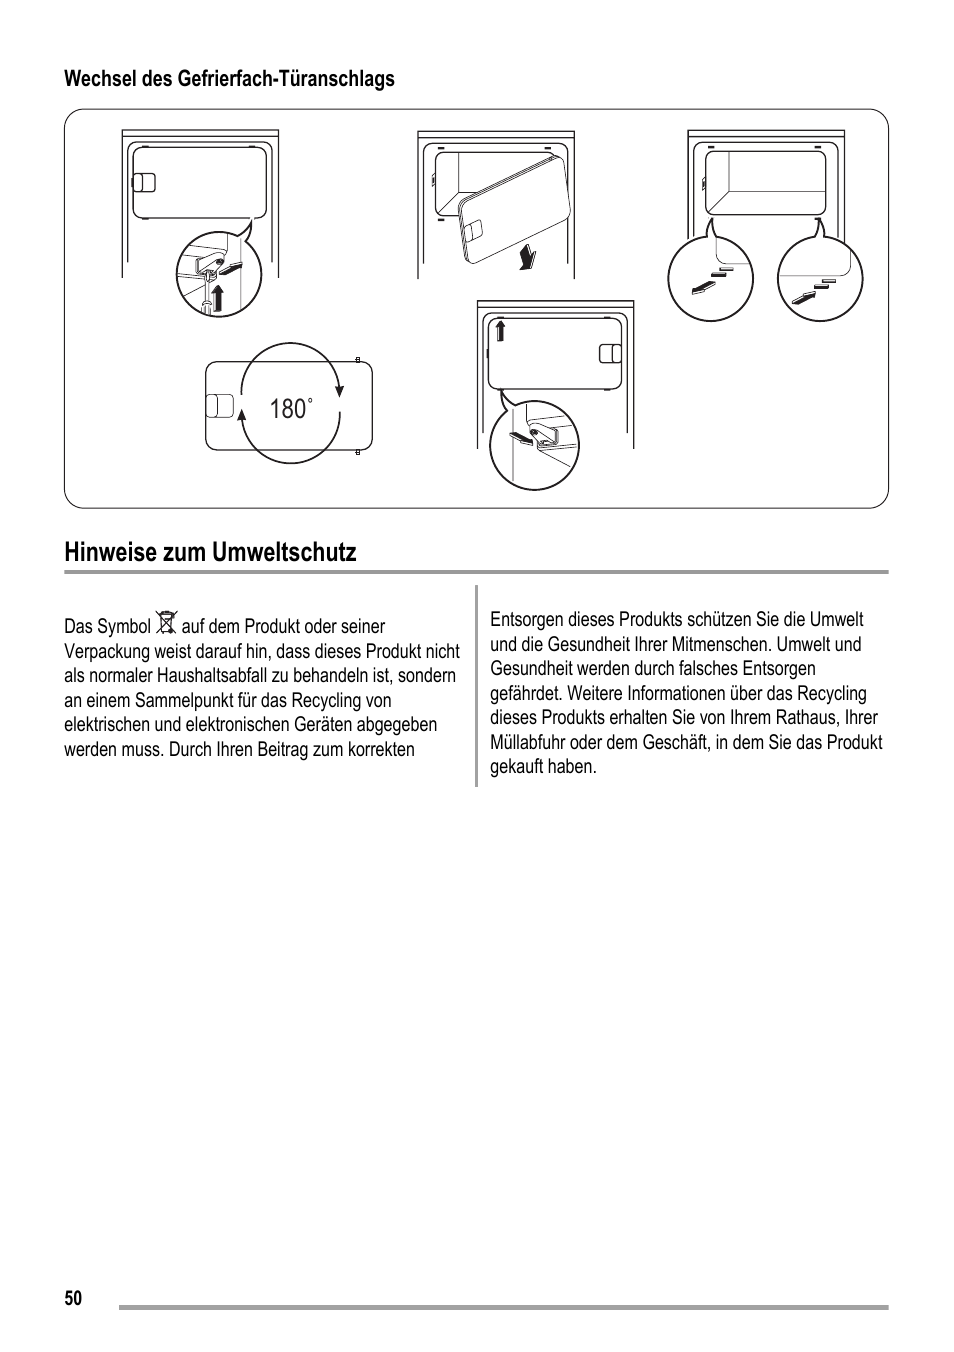 180˚ hinweise zum umweltschutz | ZANKER KBA 17401 SK User Manual | Page 50 / 52